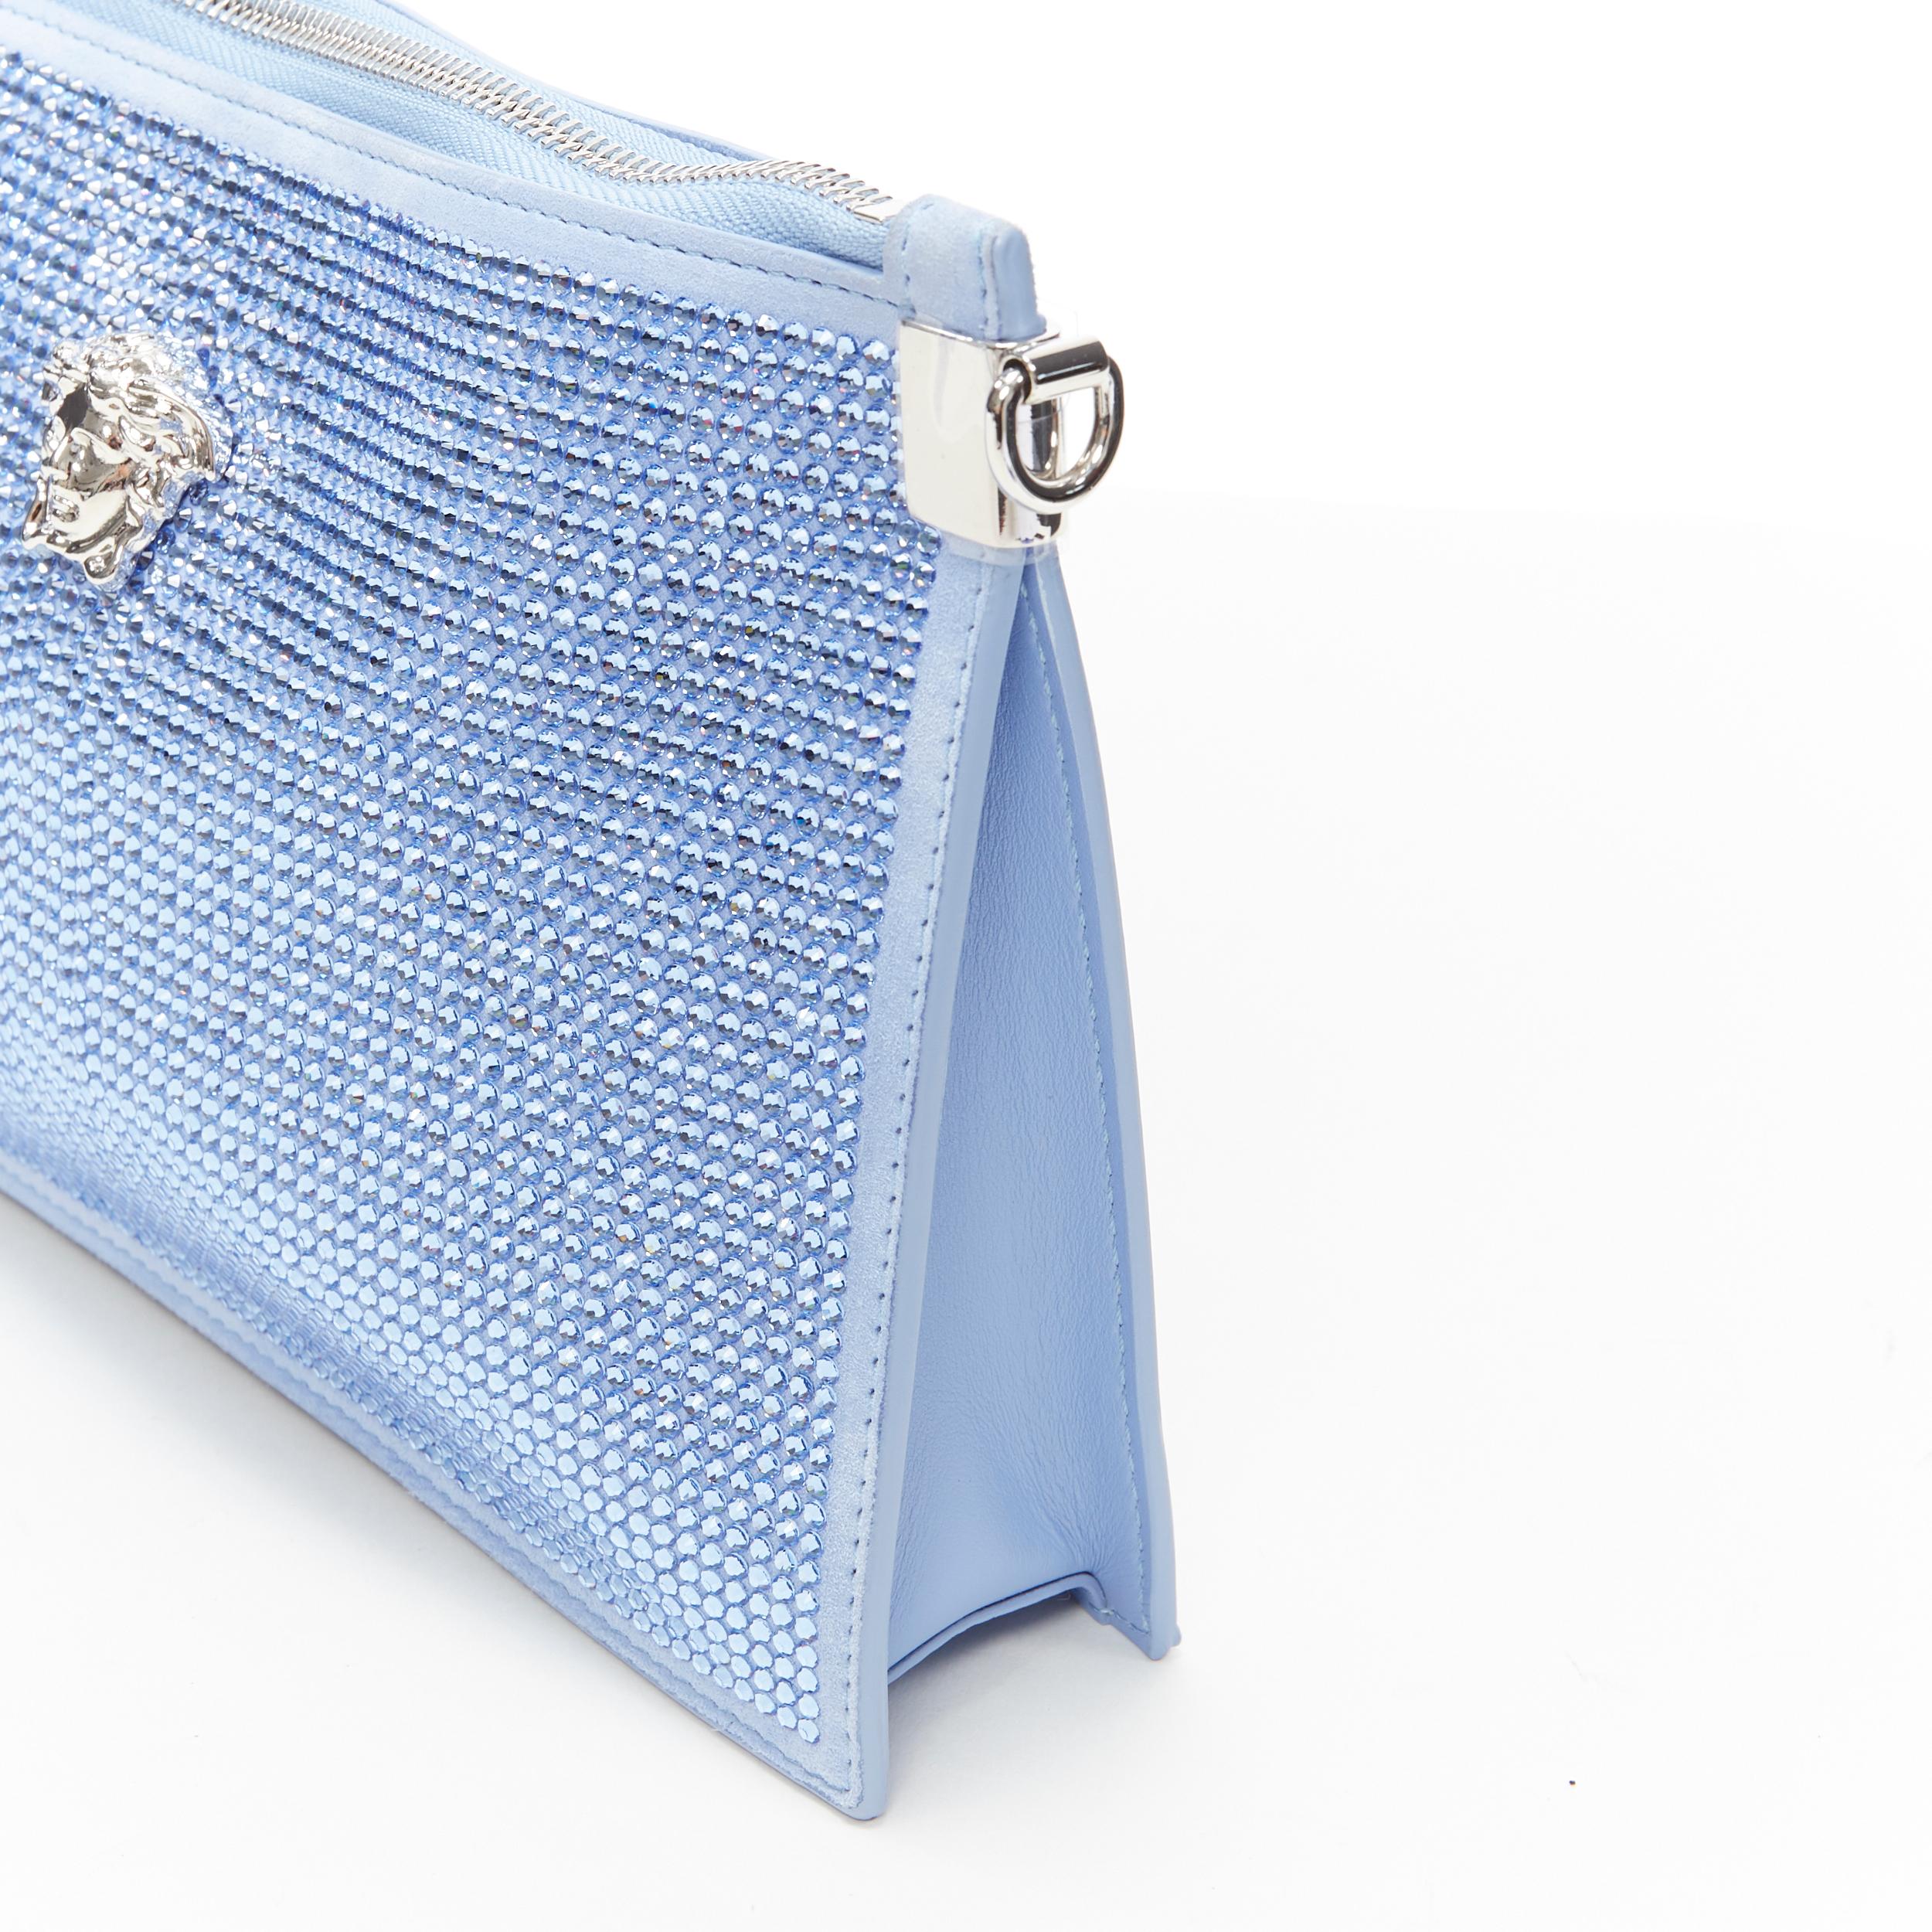 new VERSACE Palazzo Medusa blue crystal strass leather clutch crossbody bag 1